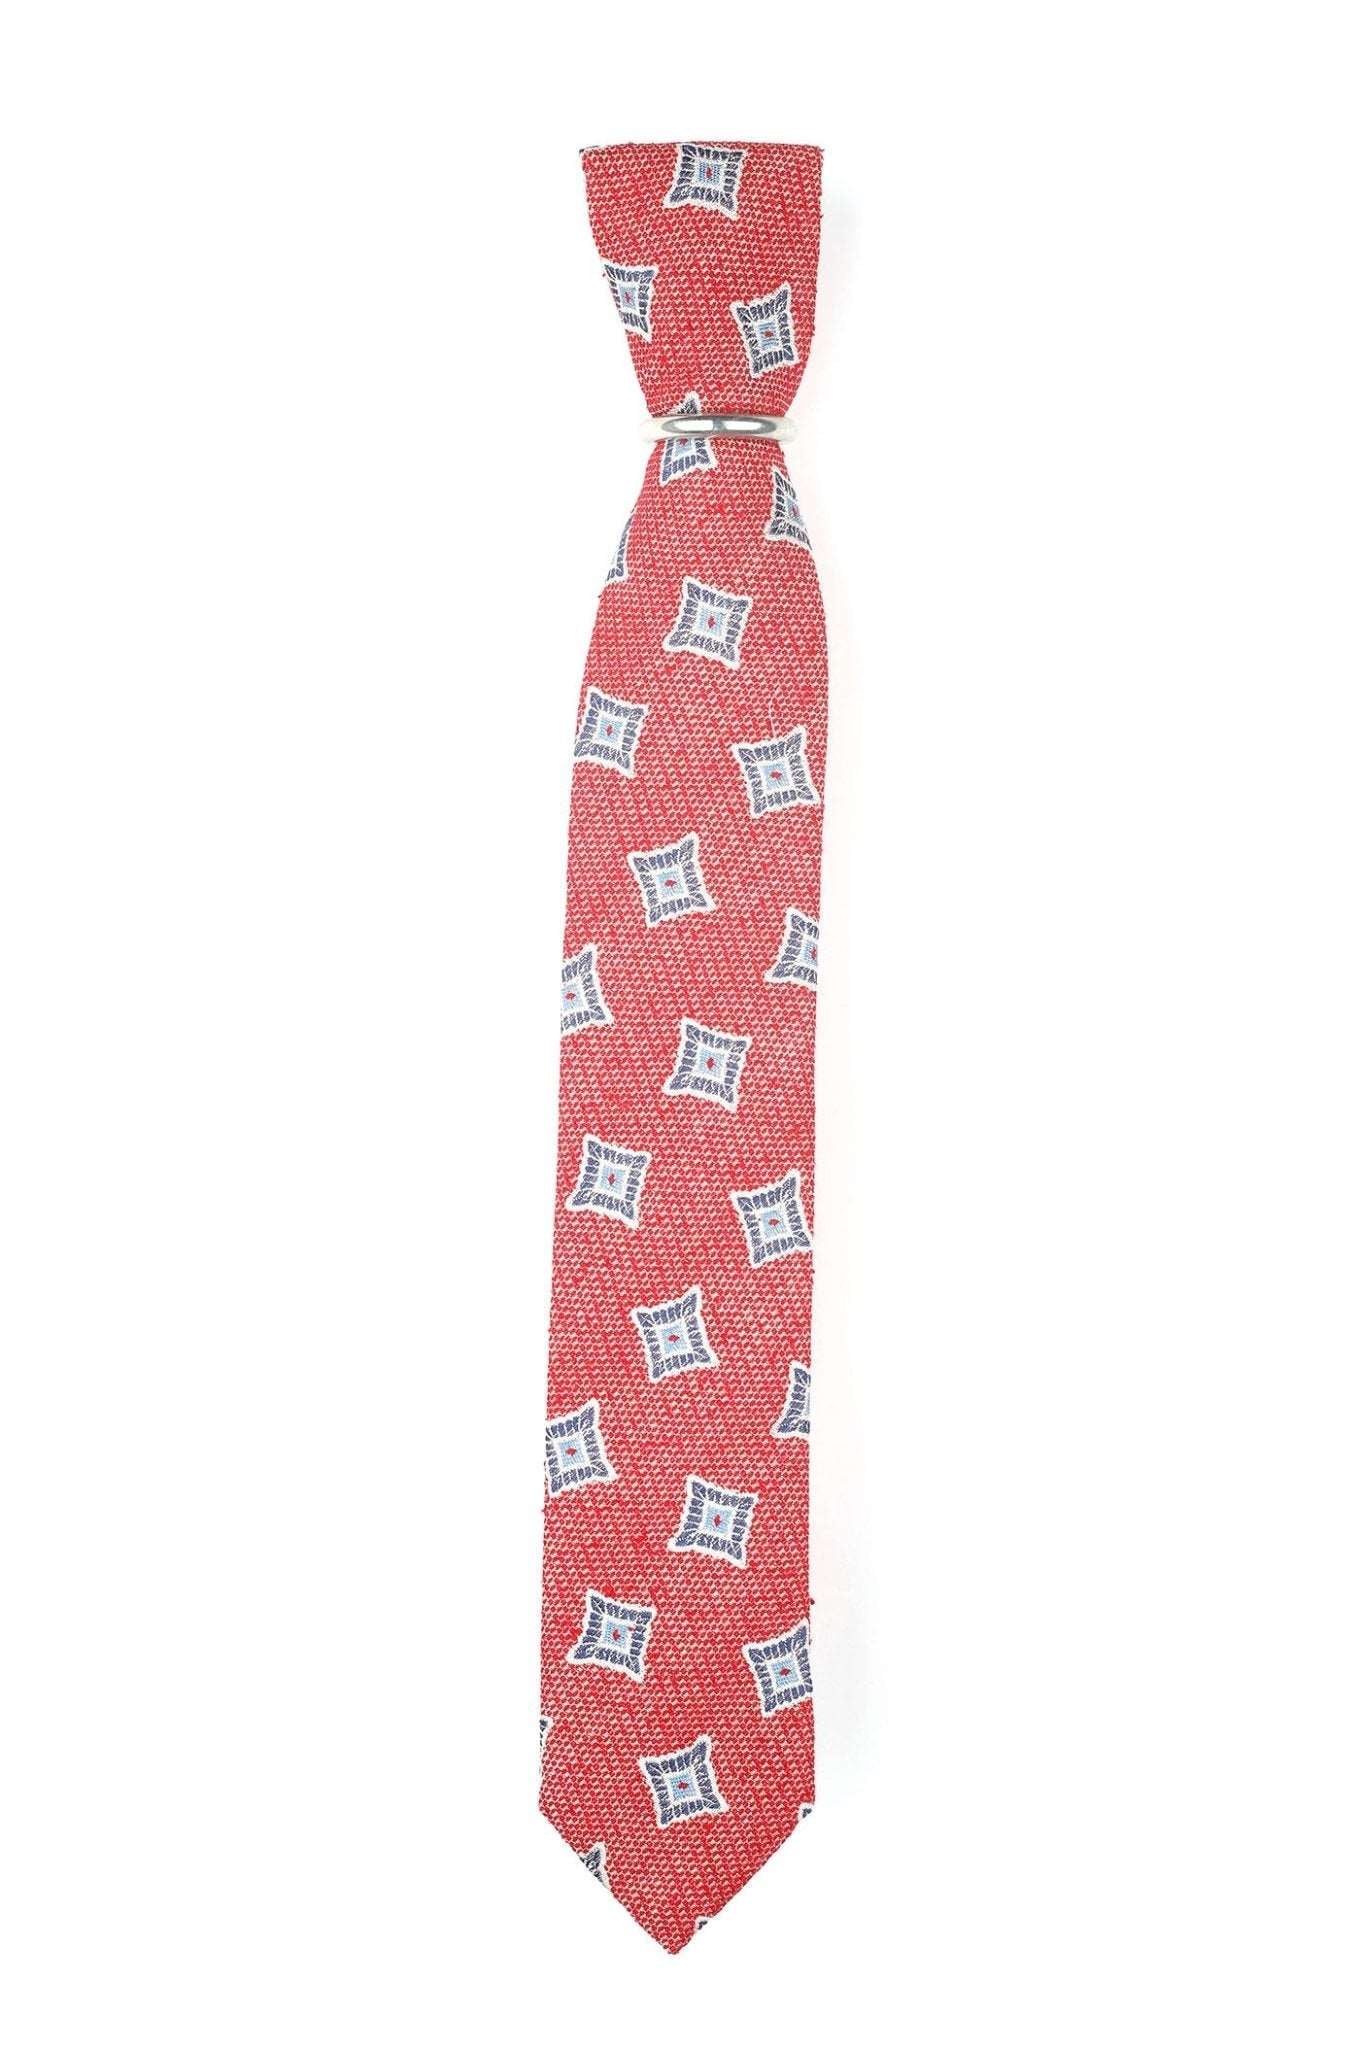 Schmale Krawatte mit markanten Motiven - REAL GUYS